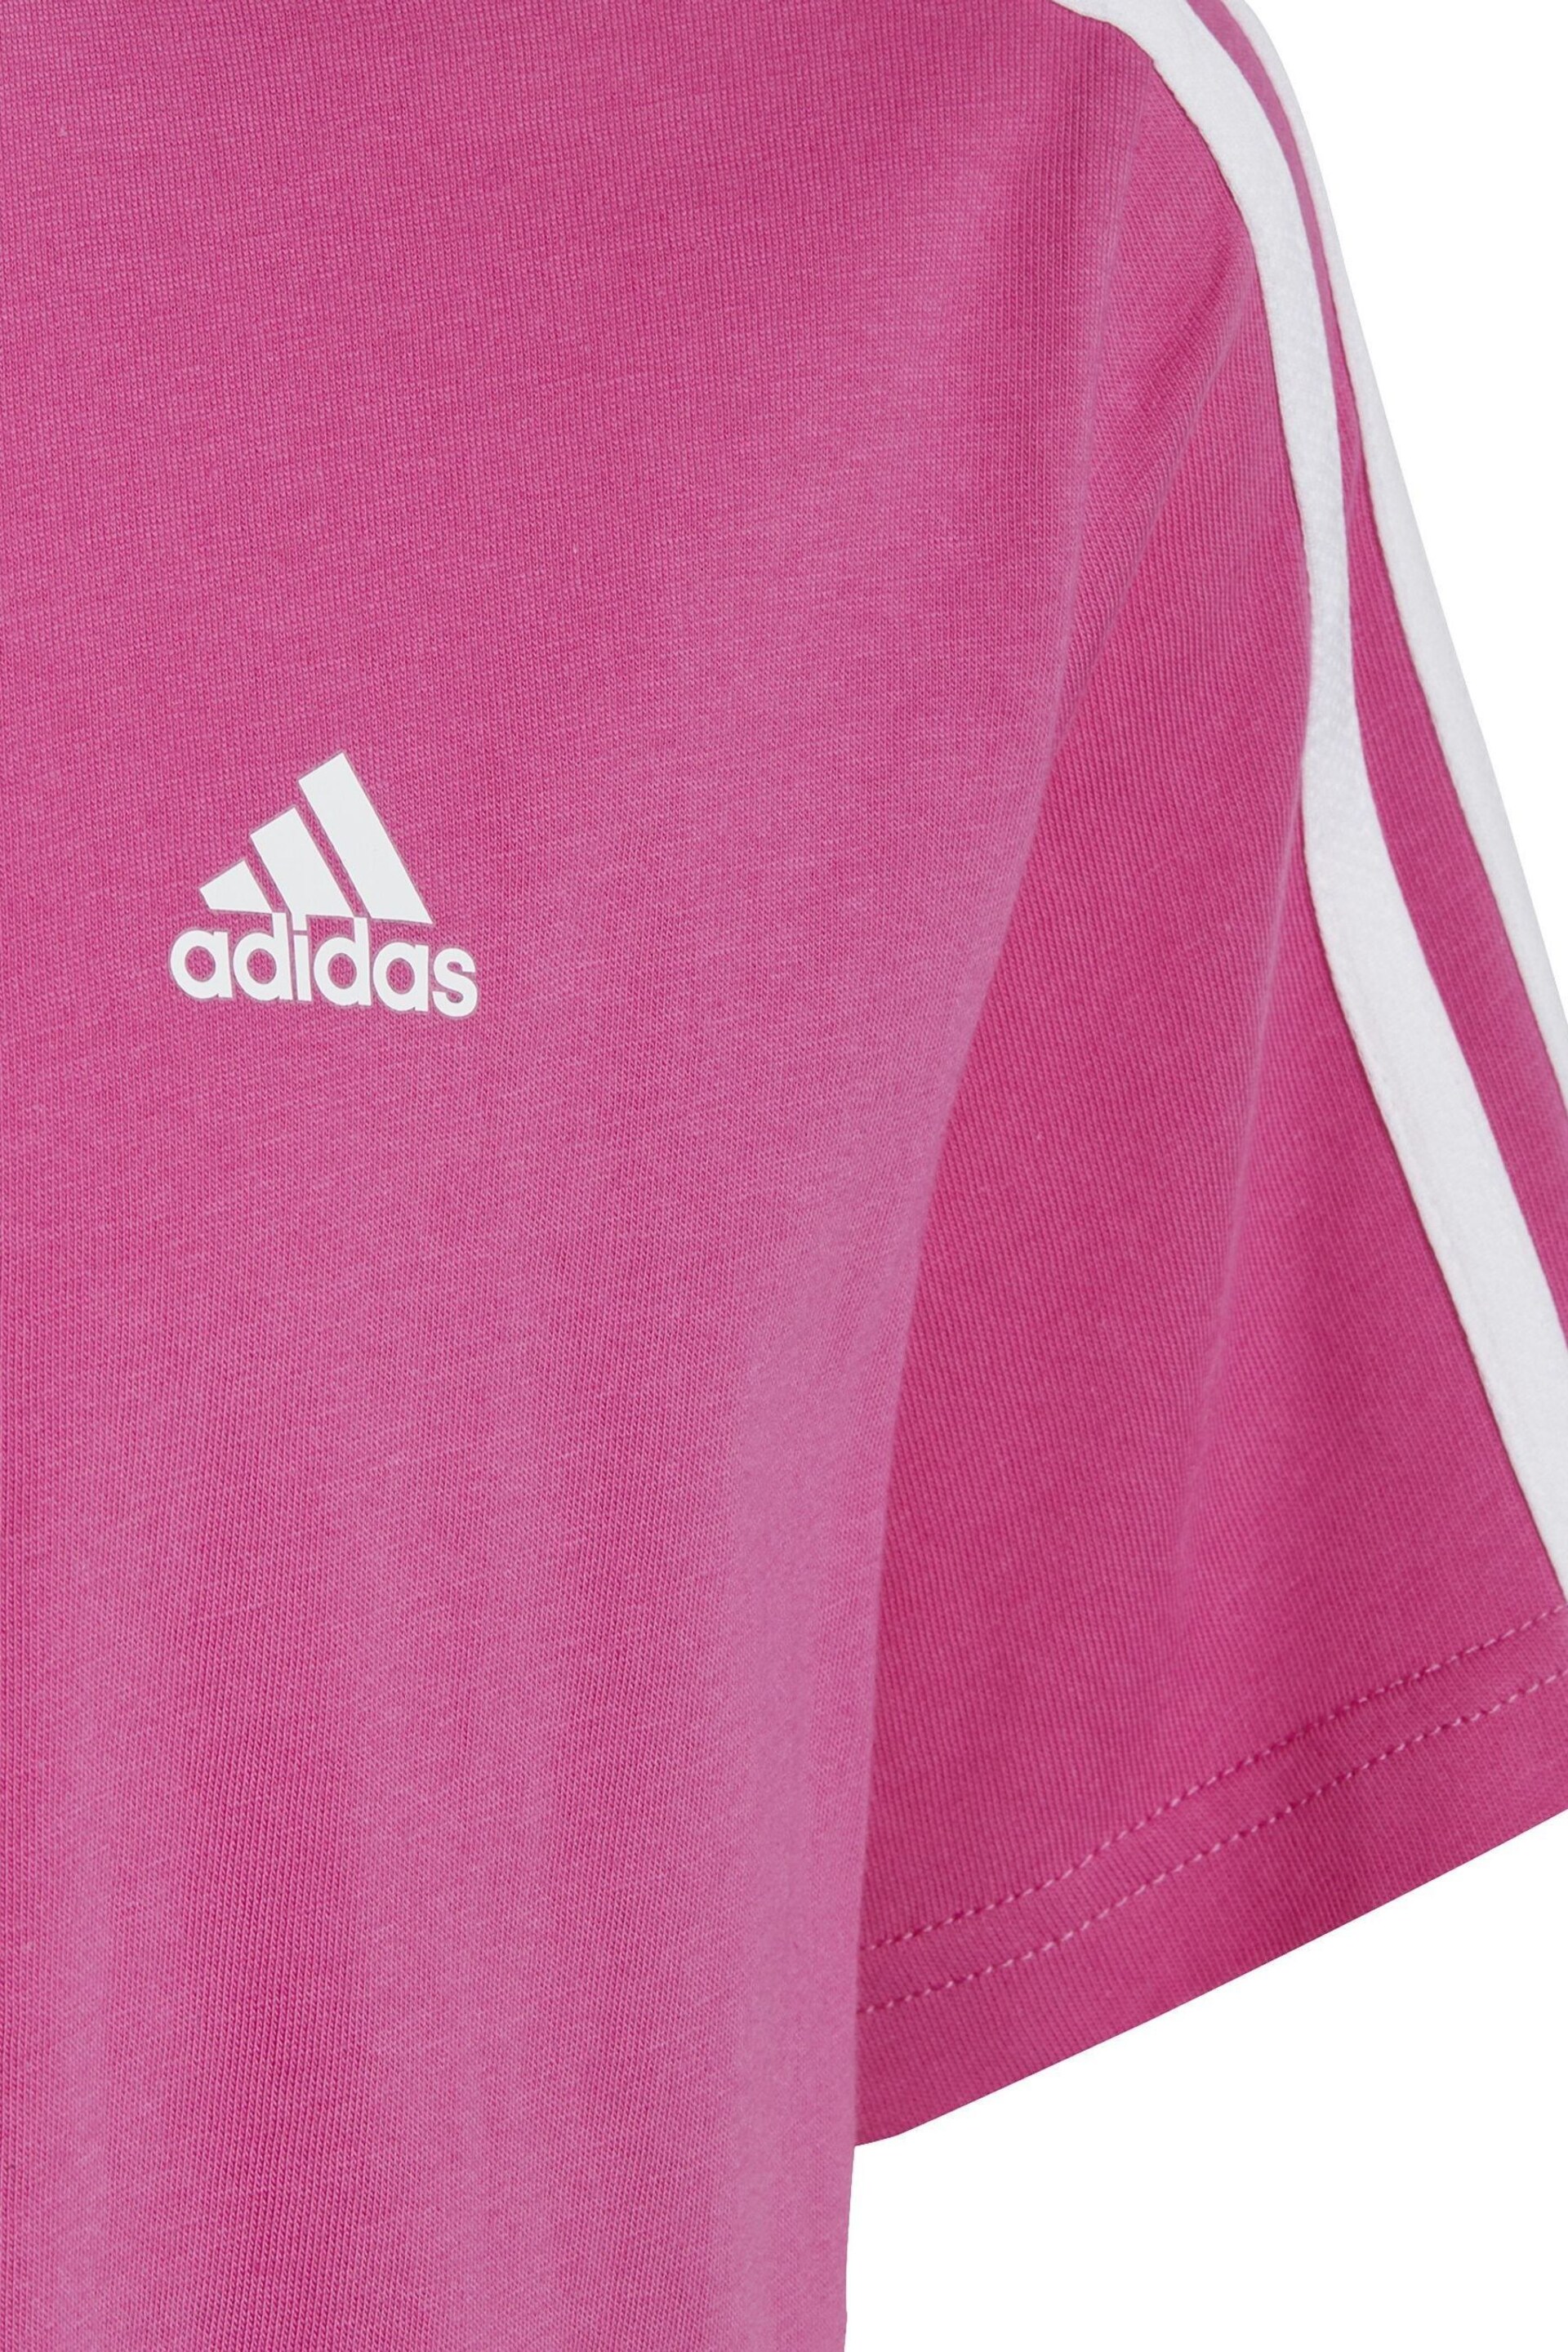 adidas Pink Boyfriend Loose Fit Sportswear Essentials 3-Stripes Cotton T-Shirt - Image 6 of 8